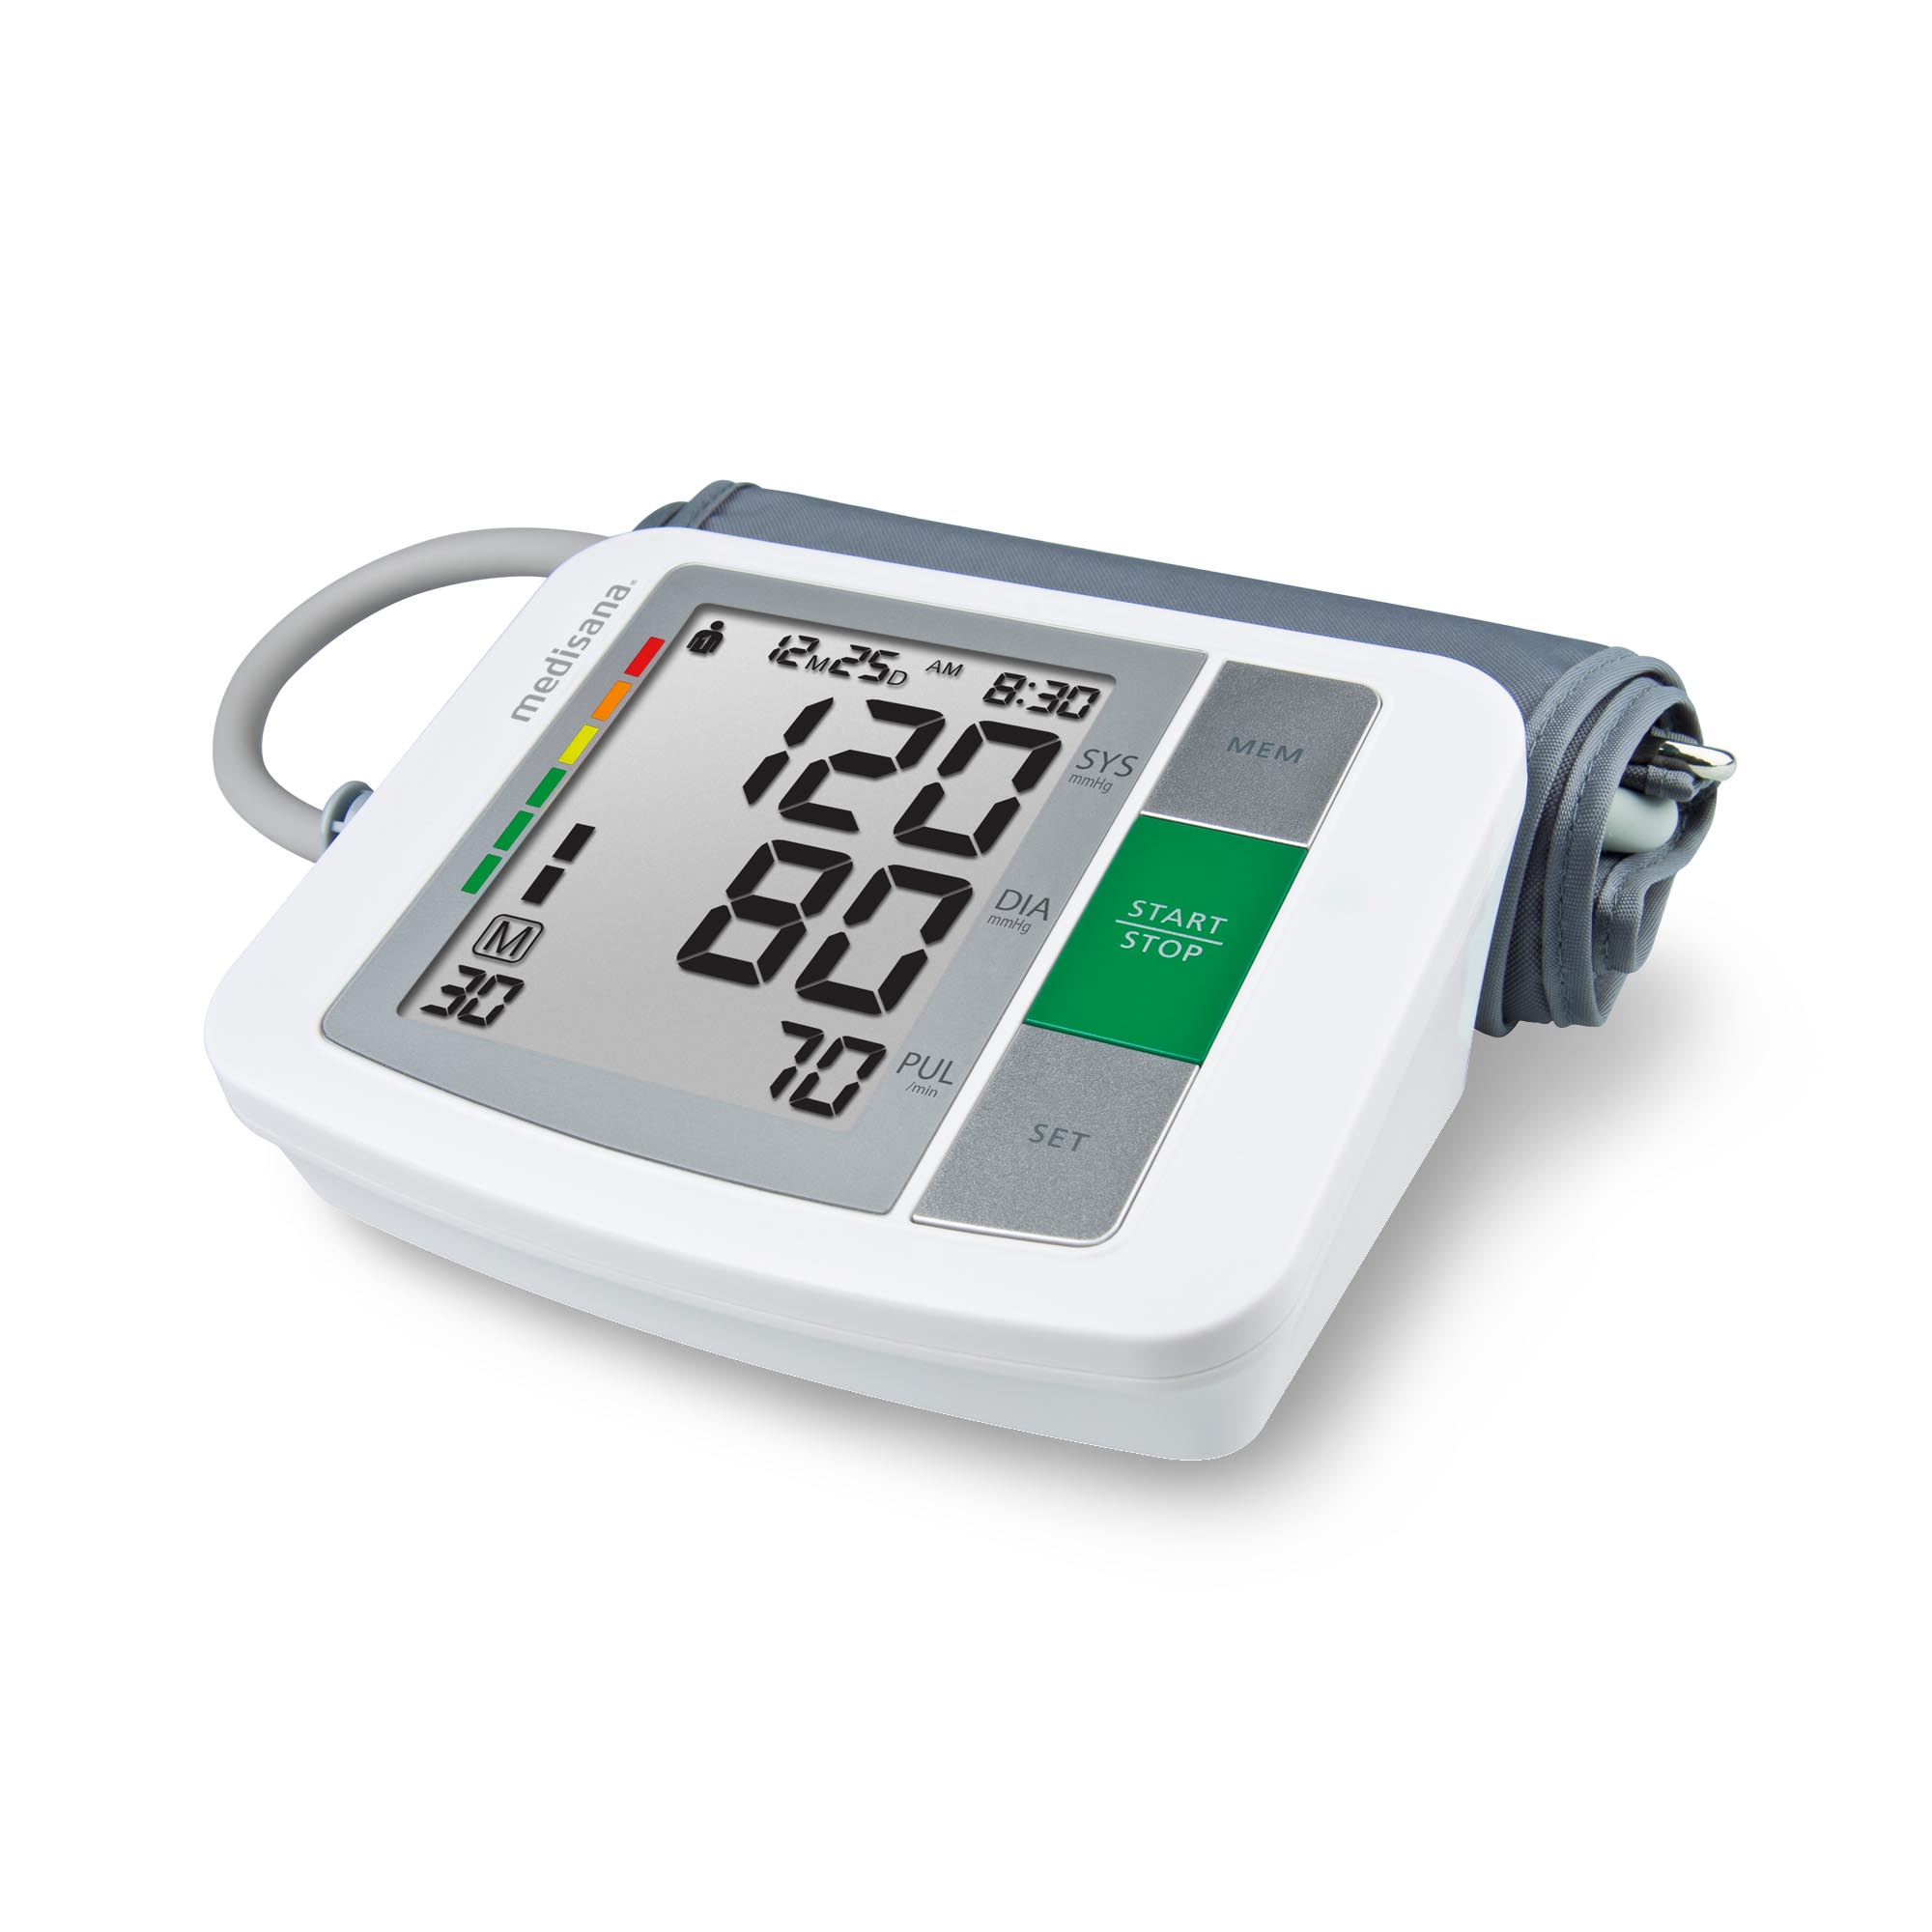 BU 510 Oberarm-Blutdruckmessgerät medisana®